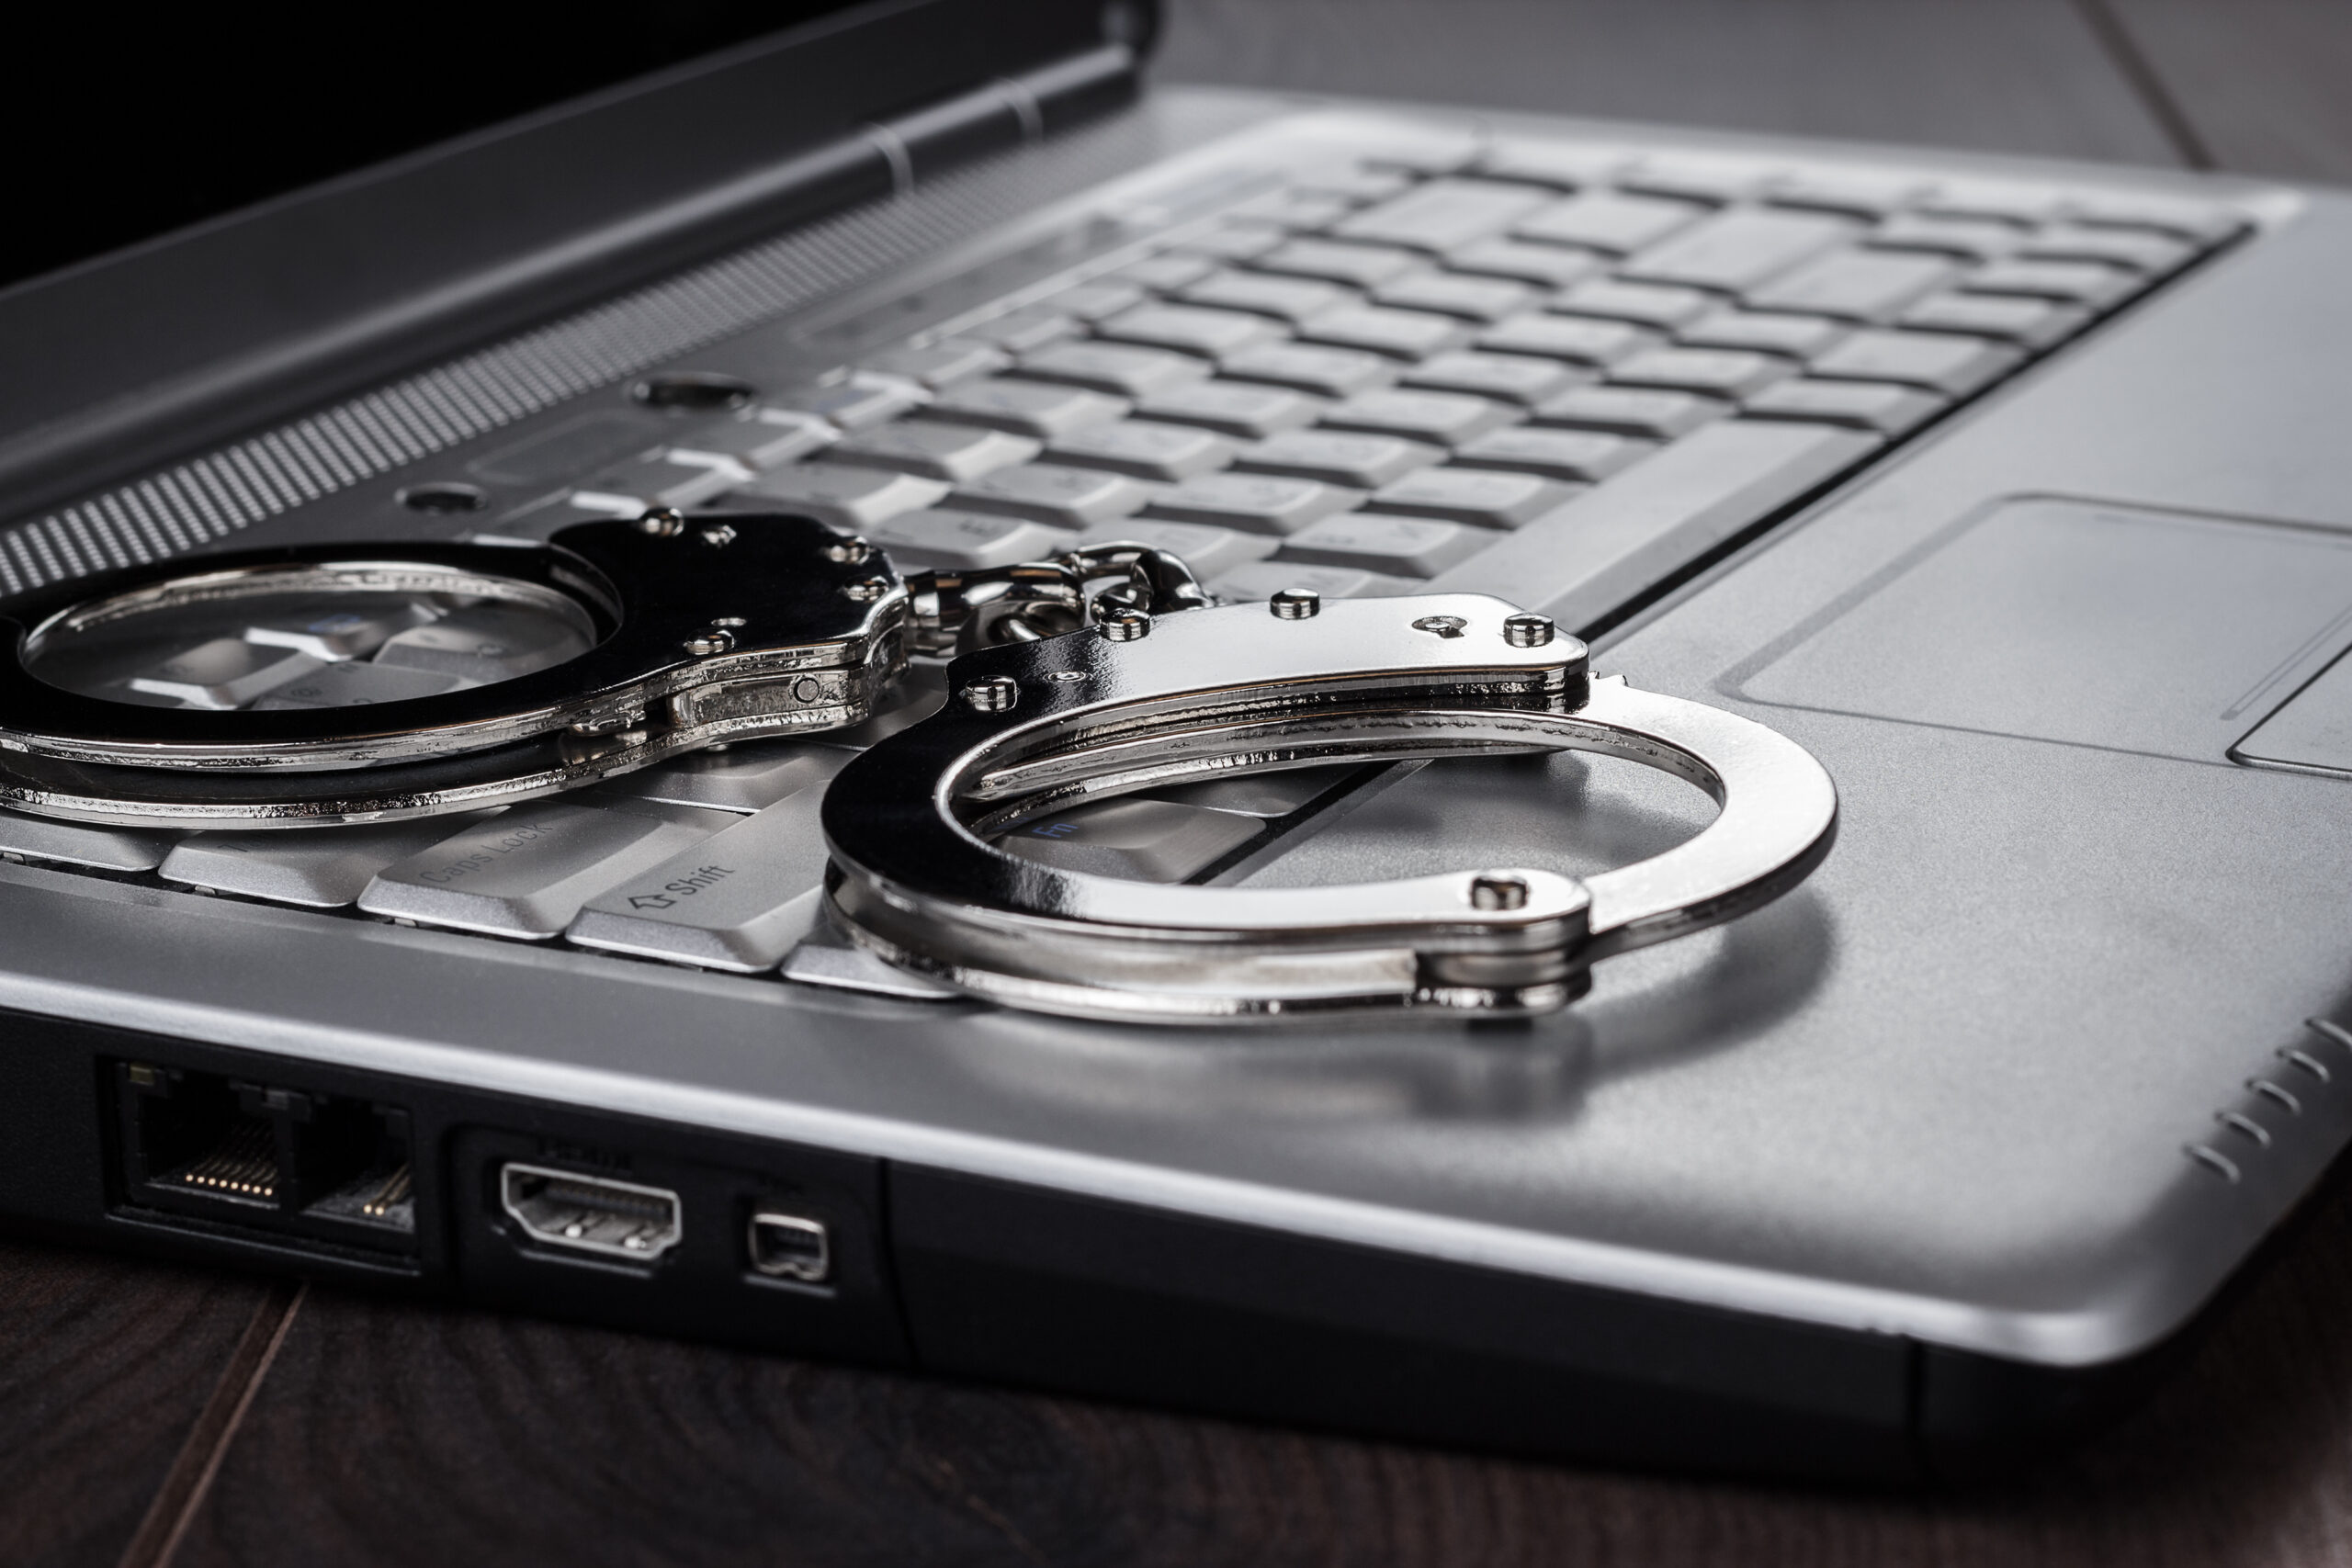 Handcuffs on a Laptop